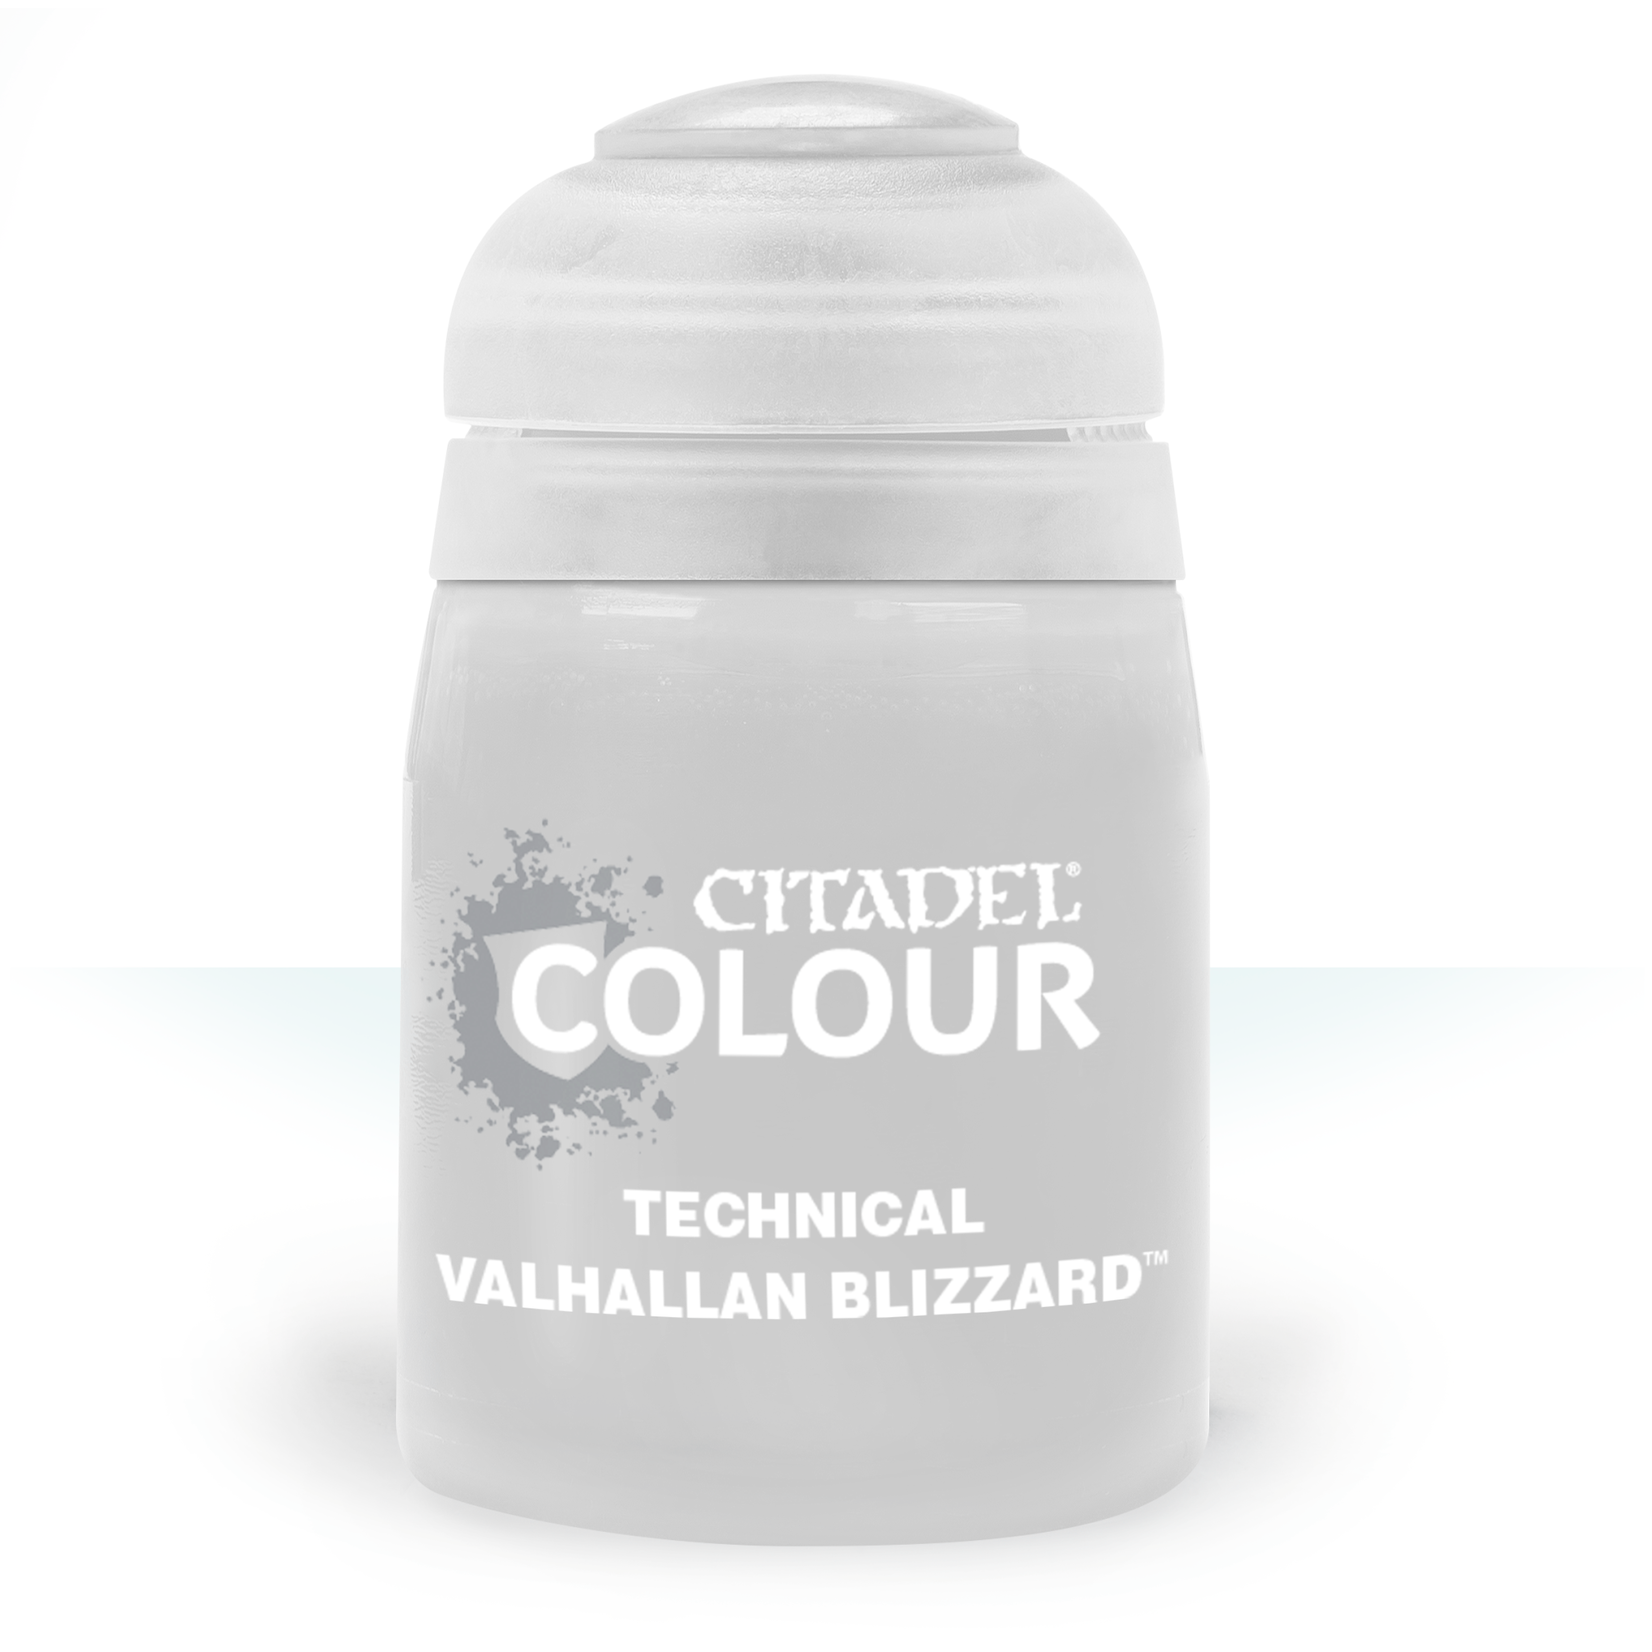 Citadel Technical Valhallan Blizzard 24ml pot